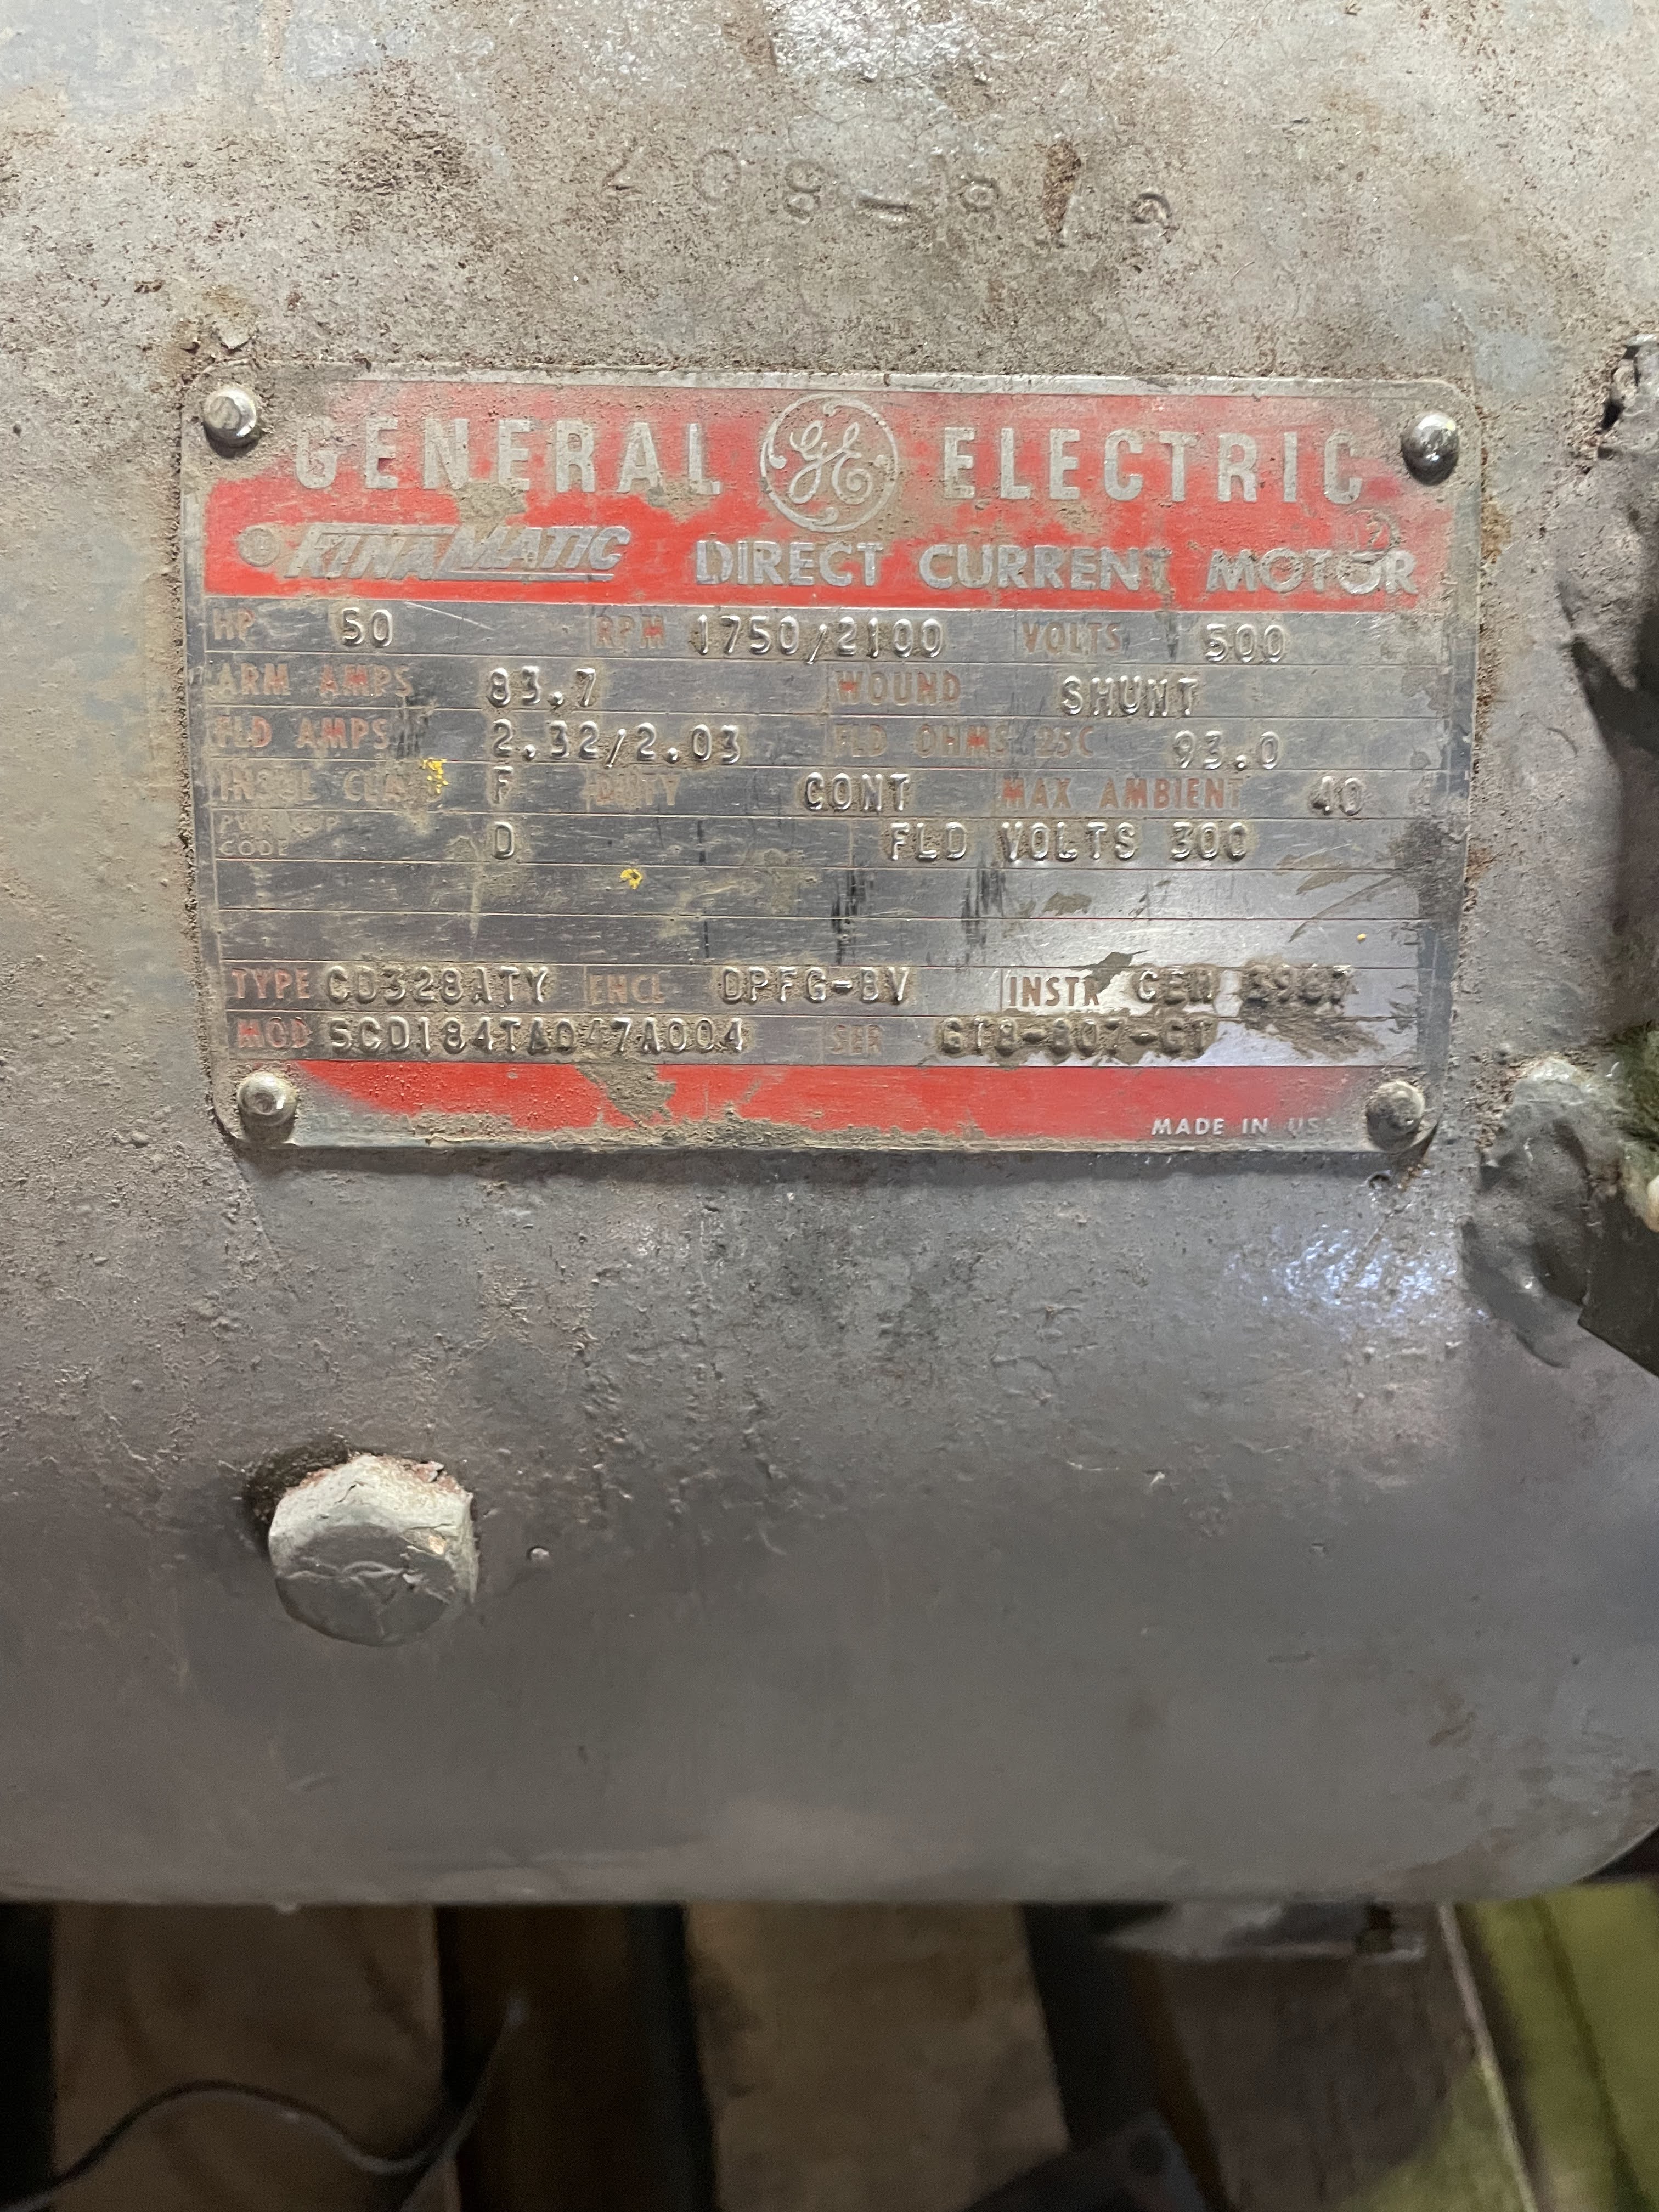 General Electric 50 HP 1750/2100 RPM 328ATY DC Motors 88201